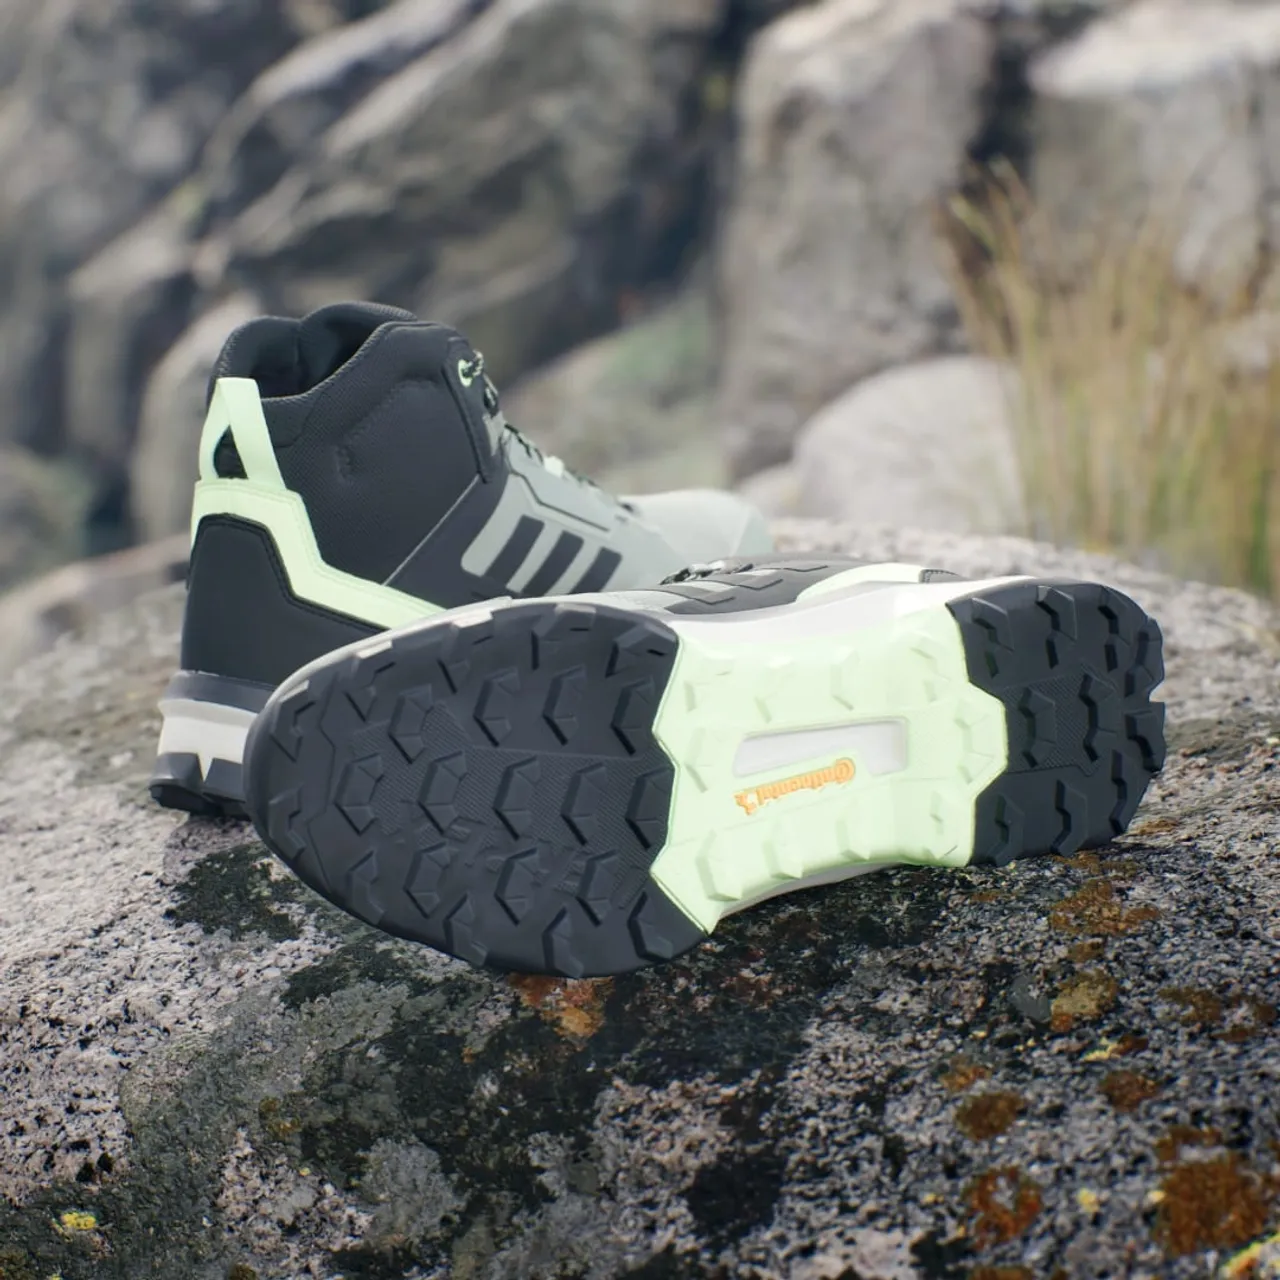 Terrex AX4 Mid GORE-TEX Hiking Shoes